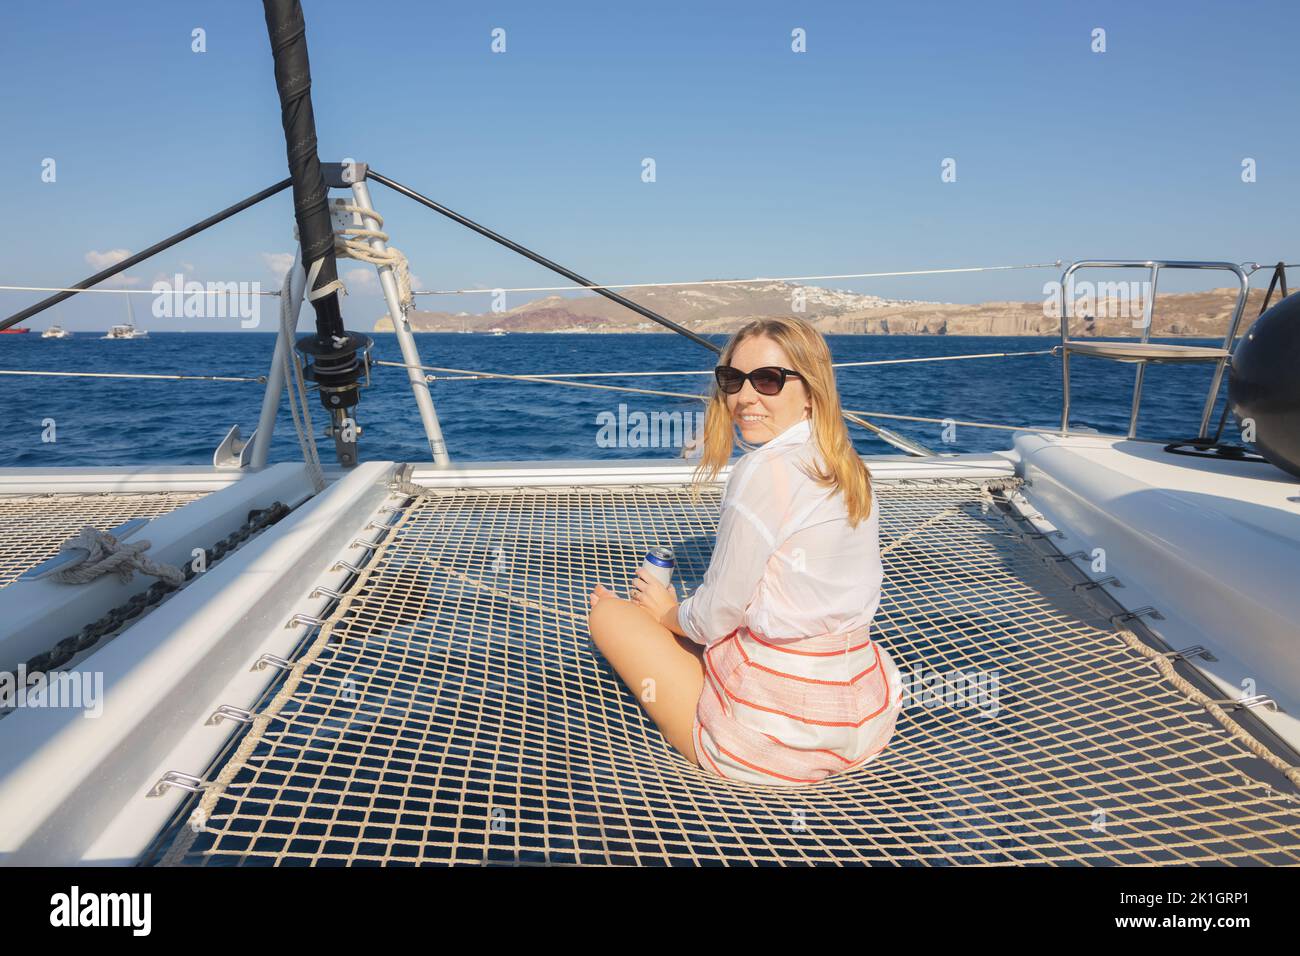 A young blonde female tourist enjoys a catamaran boat excursion on the Aegean Sea along the coast of the Greek Island Santorini, Greece. Stock Photo